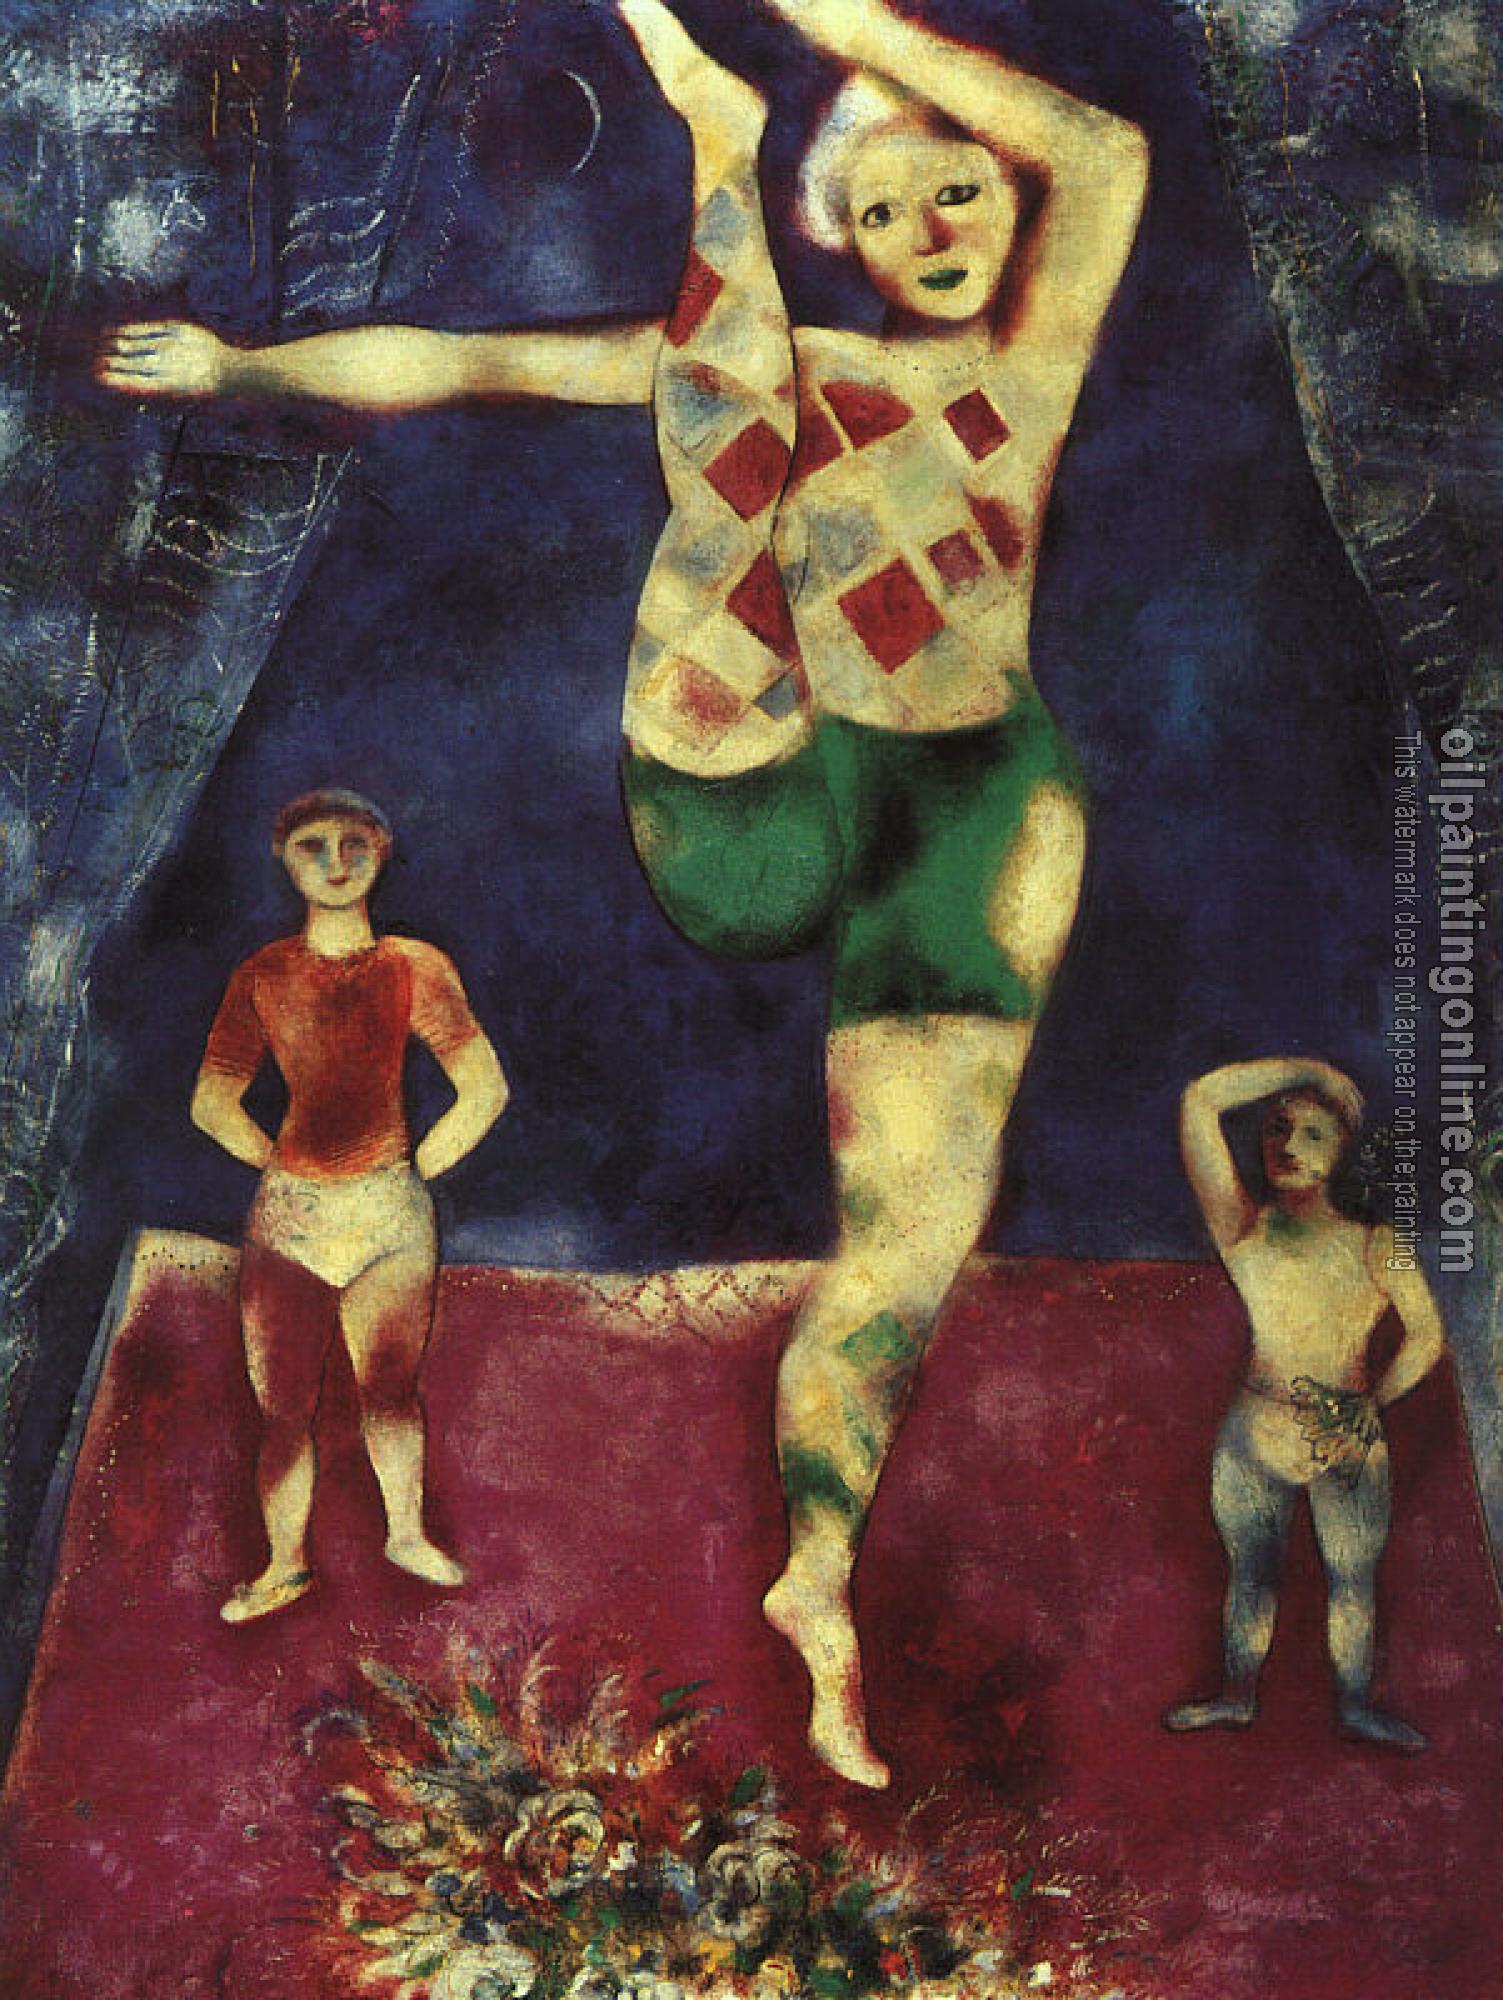 Chagall, Marc - The Three Acrobats